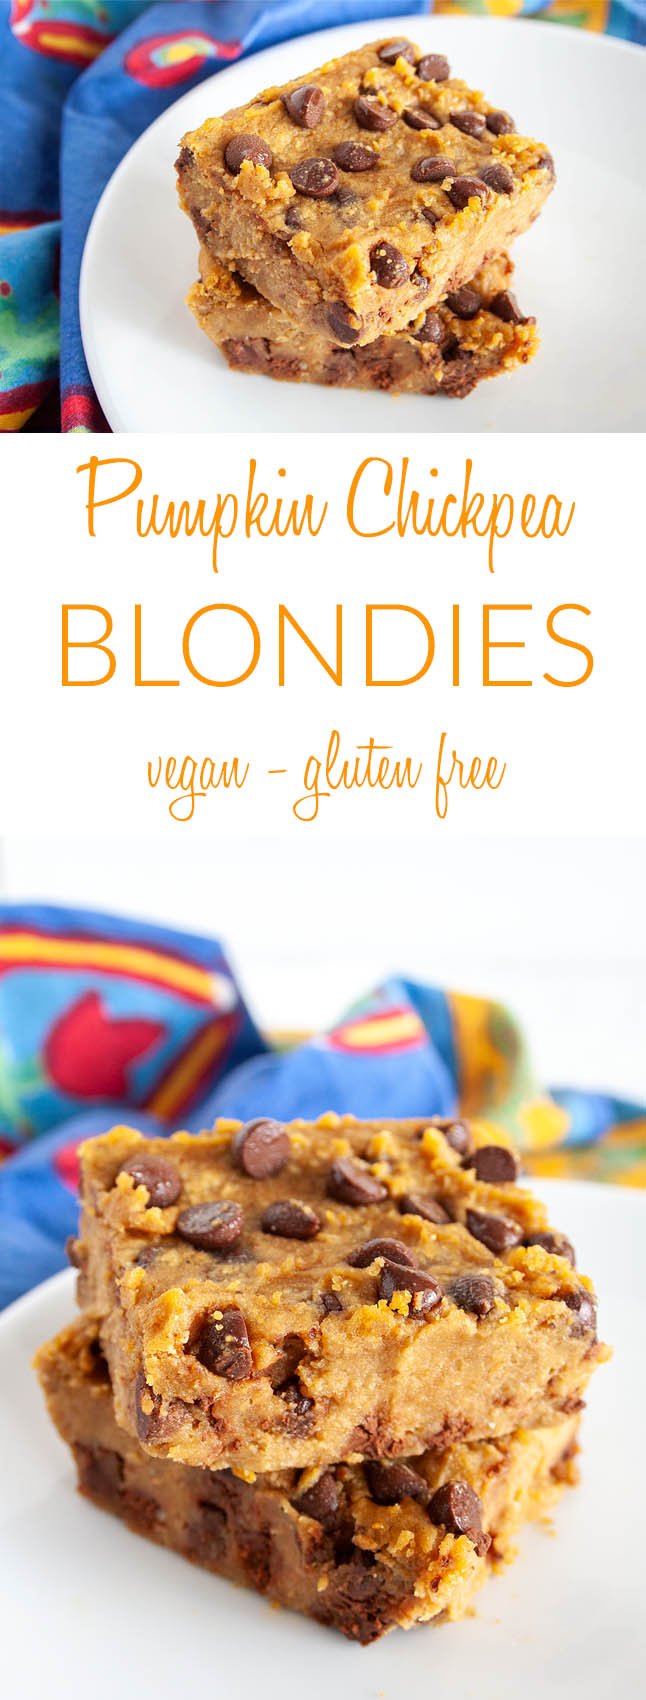 Pumpkin Chickpea Blondies collage photo with text.